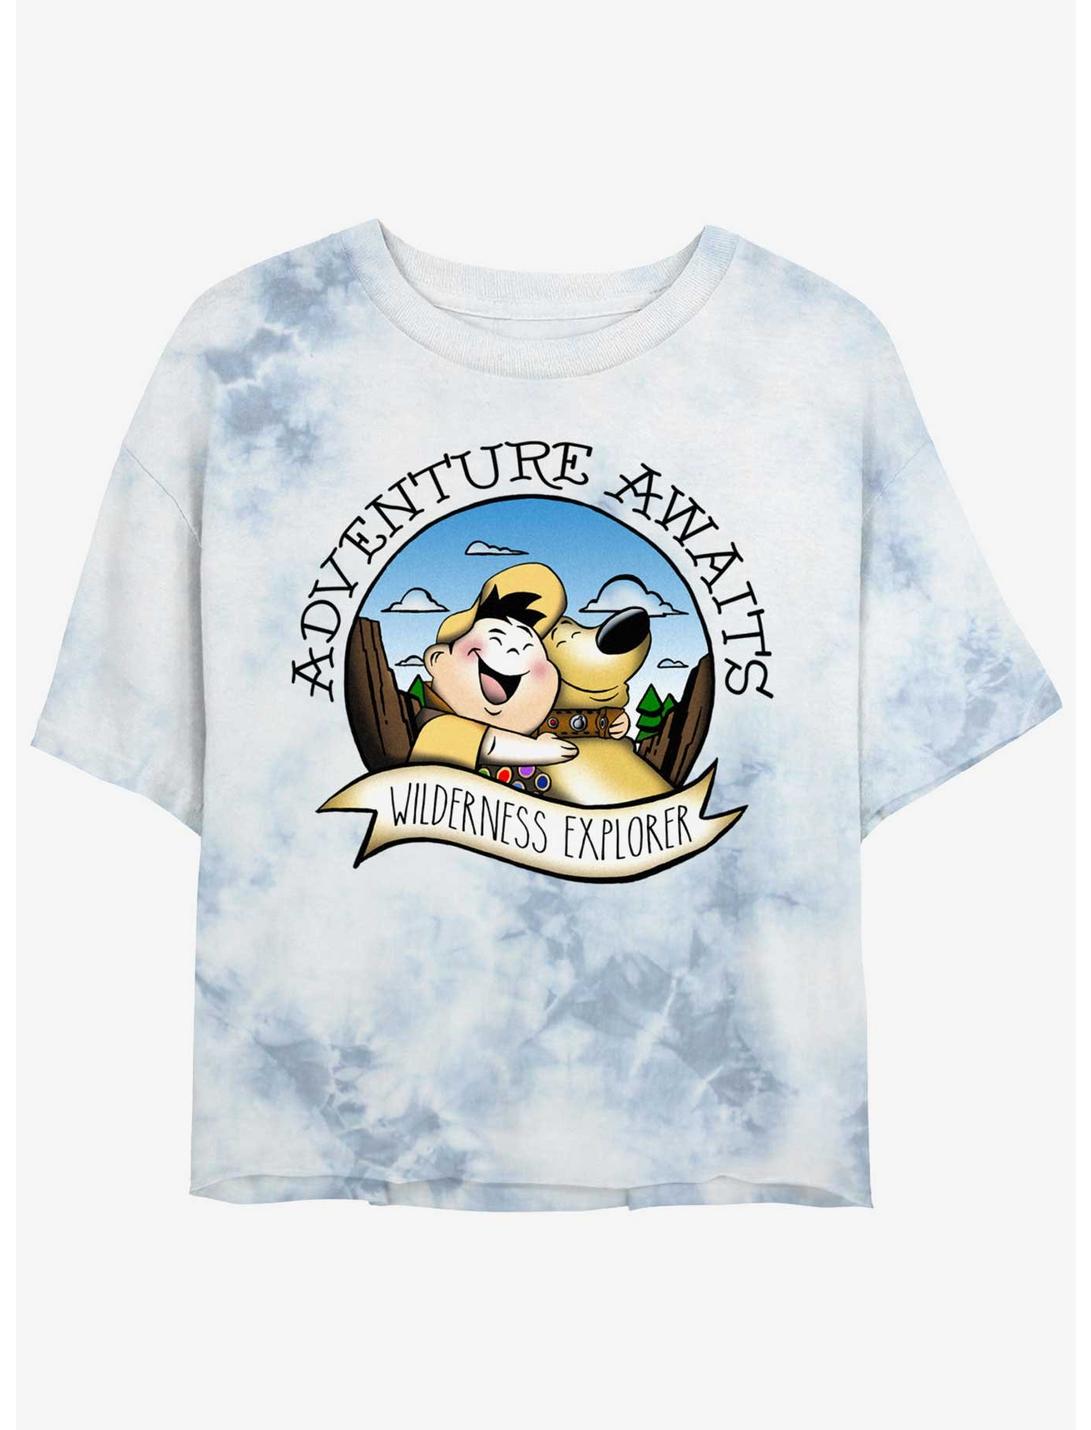 Disney Pixar Up Russell and Dug Wilderness Explorer Girls Tie-Dye Crop T-Shirt, WHITEBLUE, hi-res